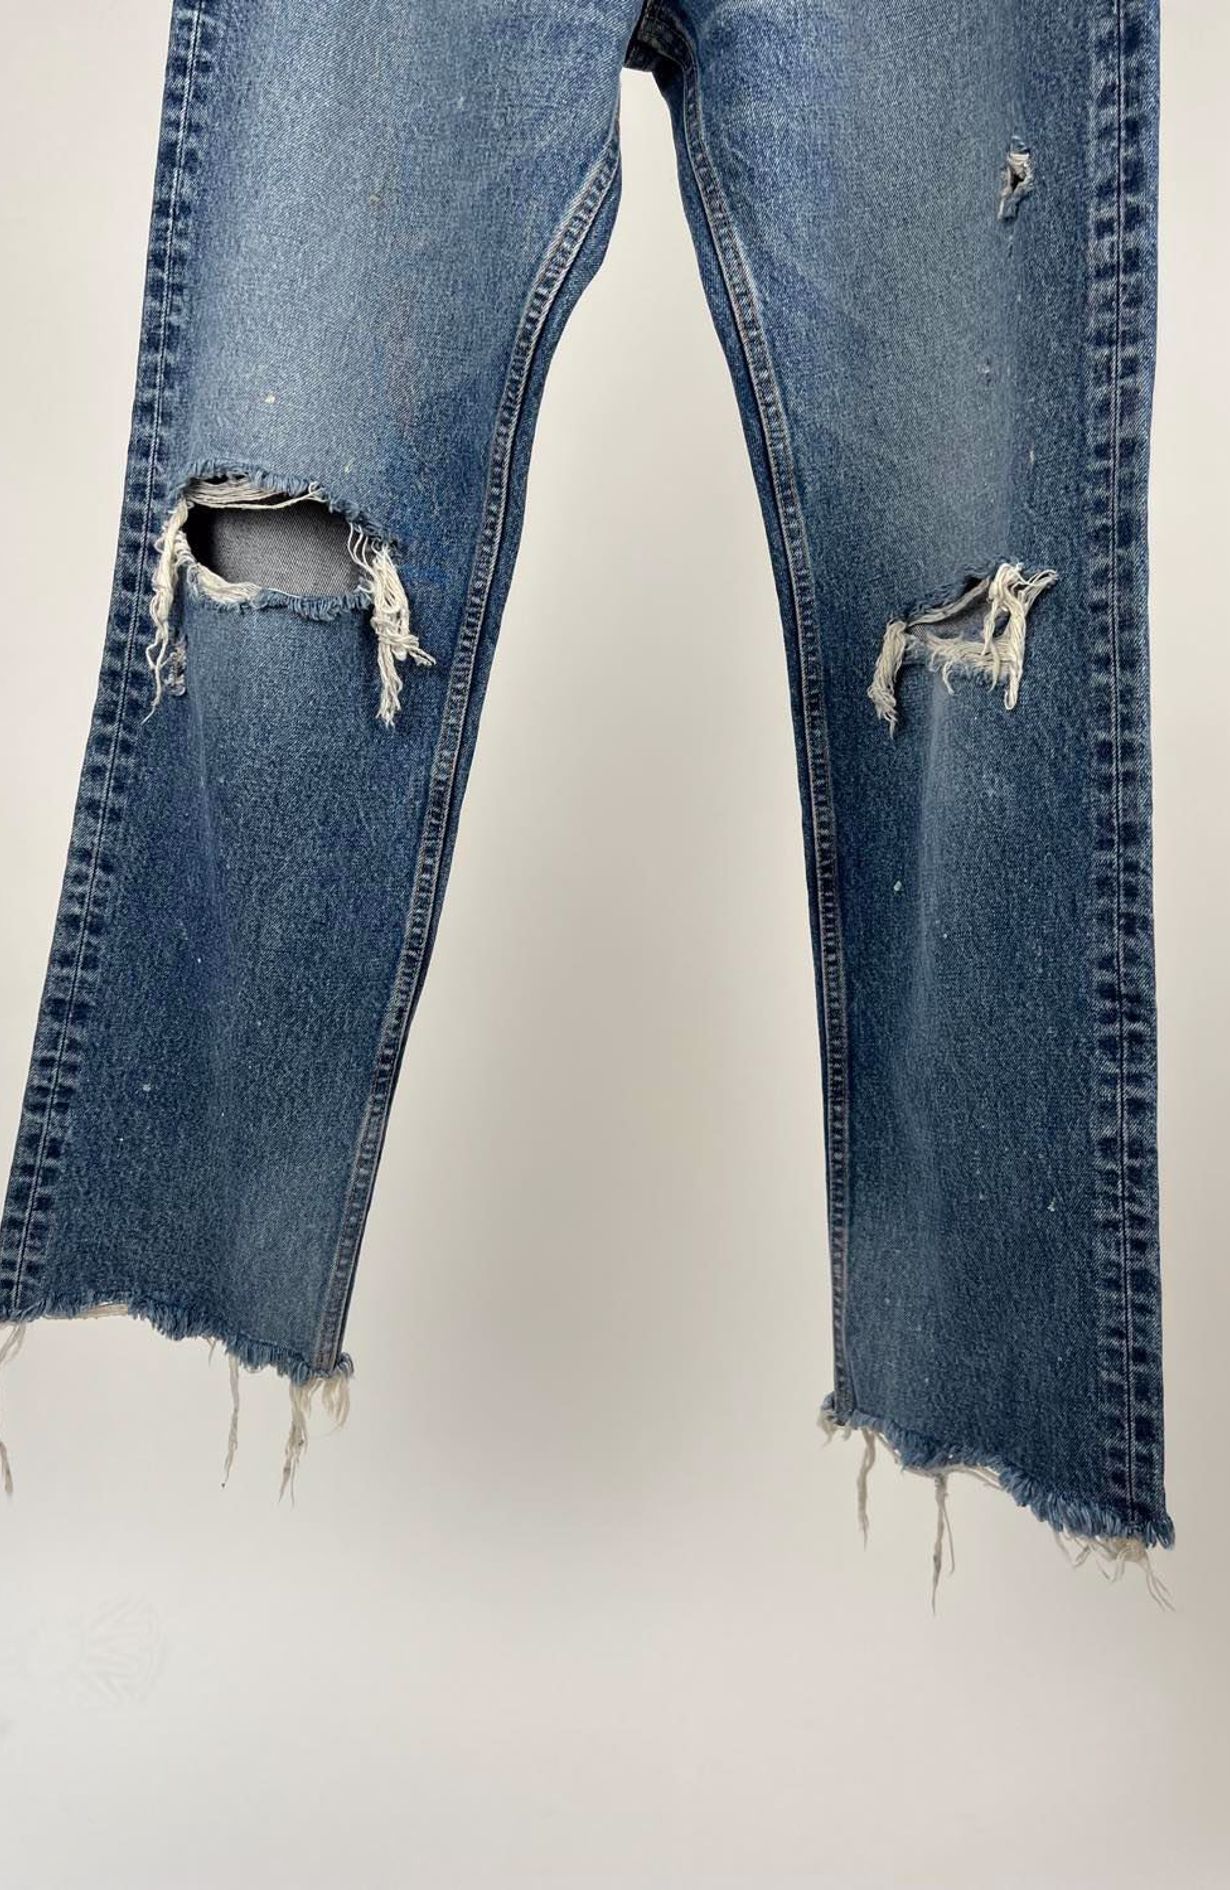 Moussy jeans size 28